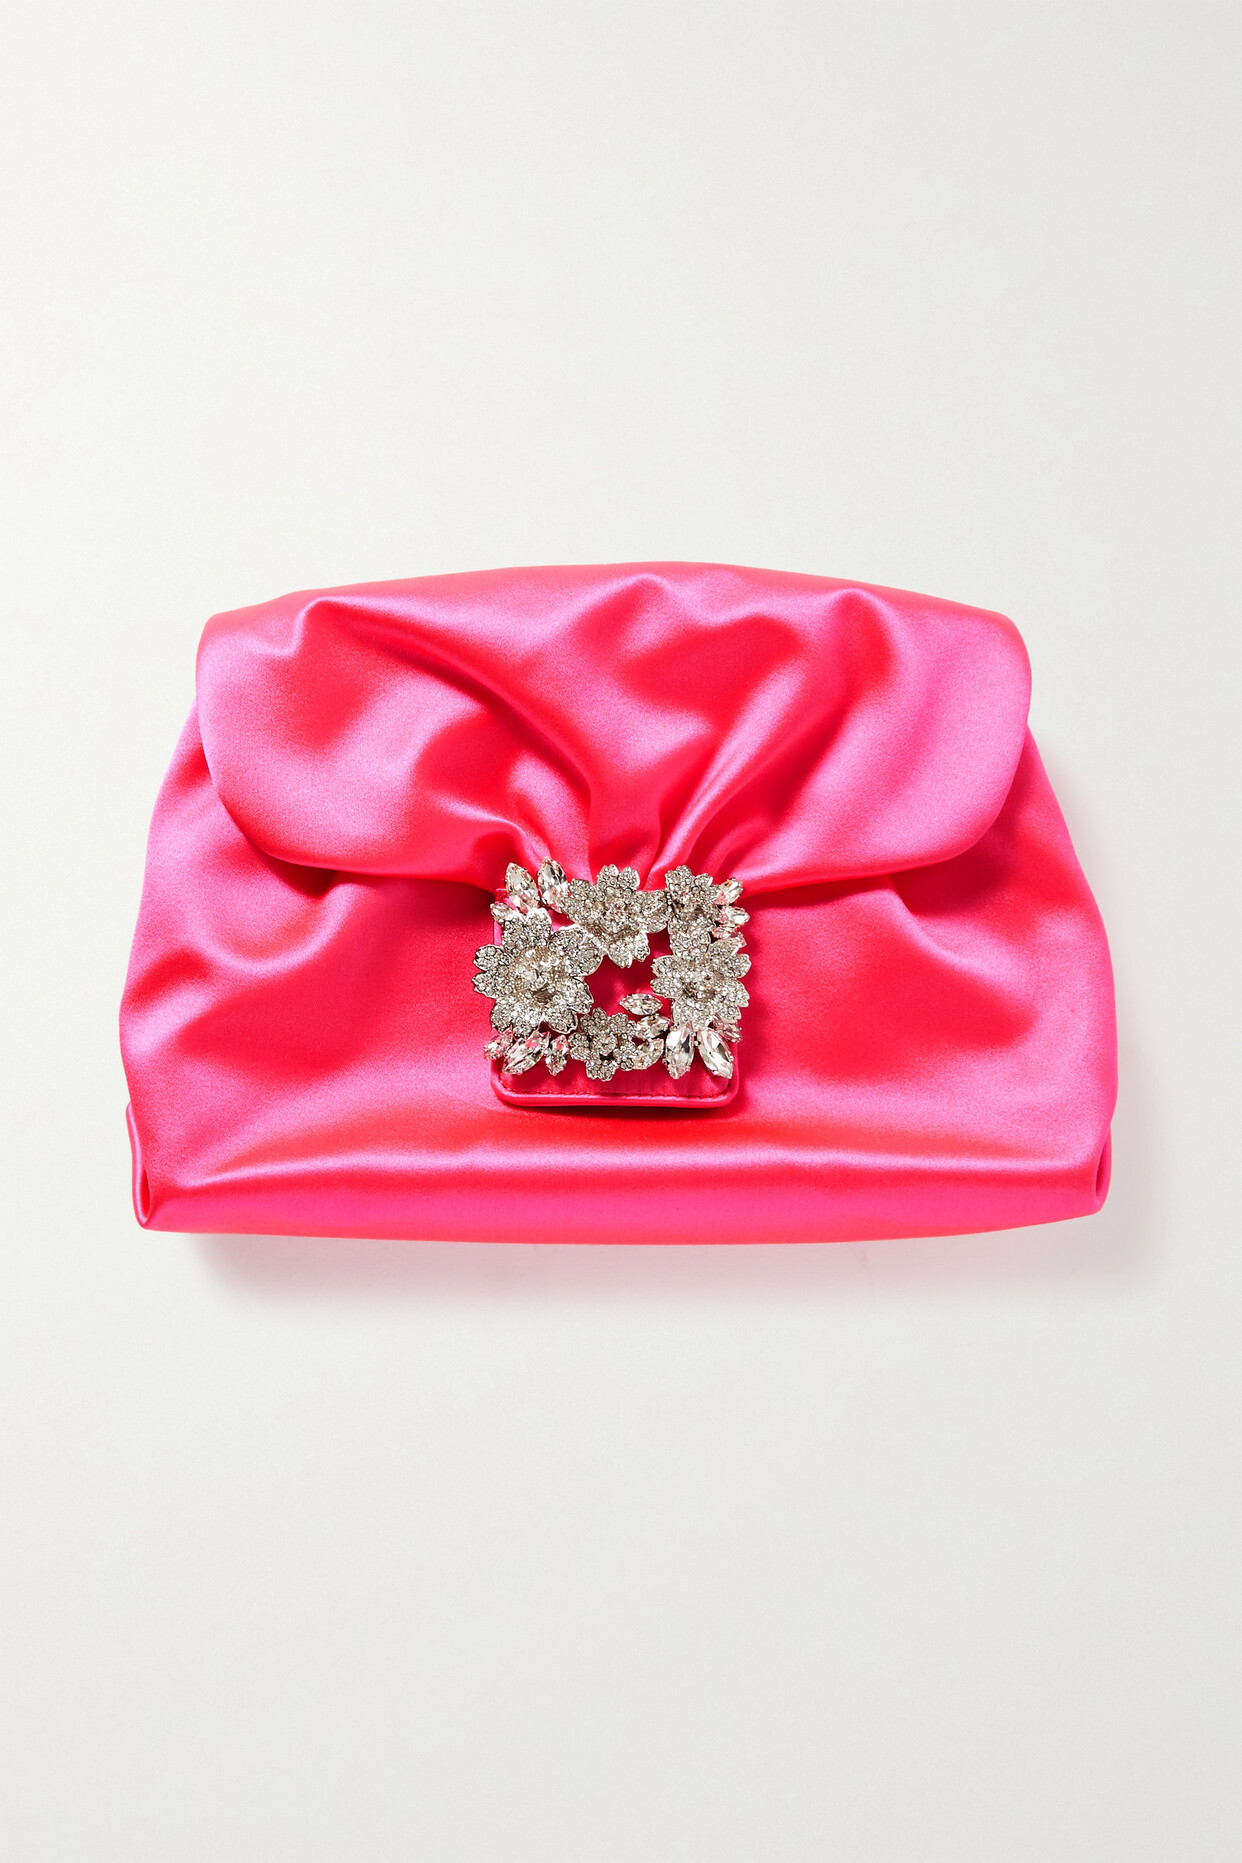 Roger Vivier - Rv Bouquet Strass Drape Embellished Satin Clutch - Pink